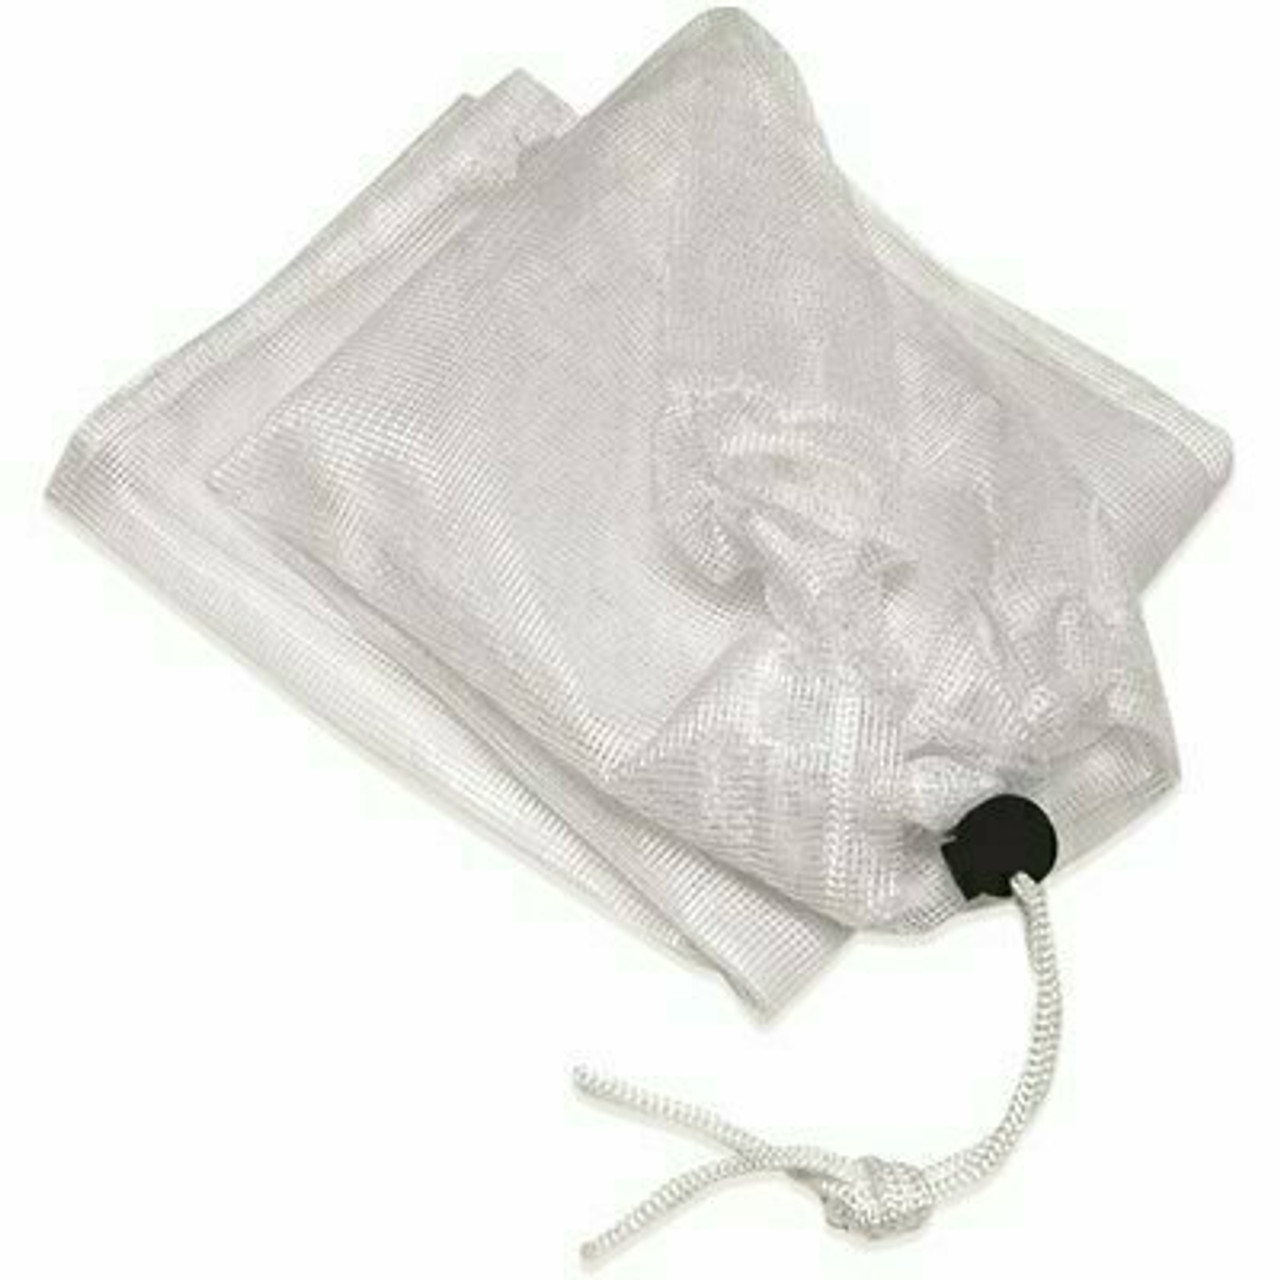 Hdx Replacement Swimming Pool Leaf Vacuum Bag With Drawstring Closure